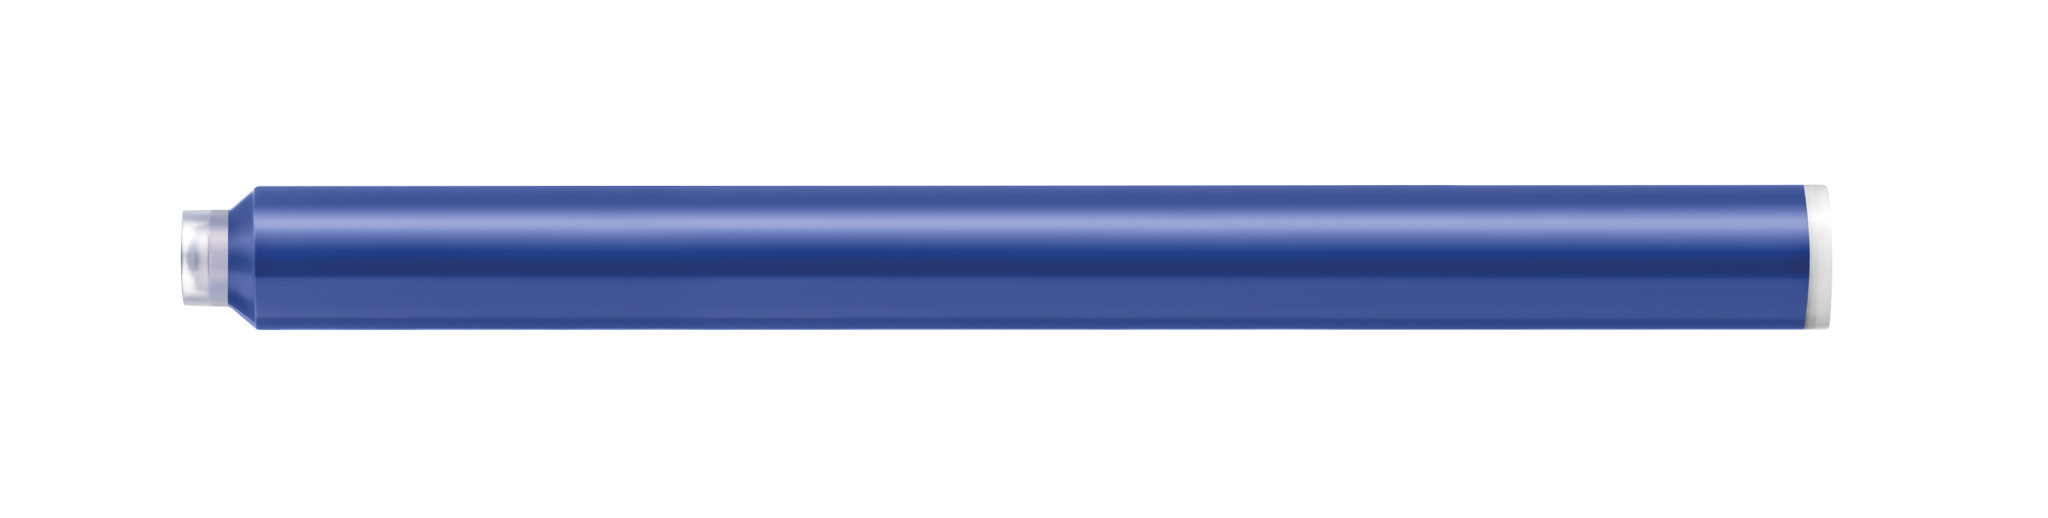 Pelikan Large Capacity 4001® Ink Cartridges GTP/5,  Royal Blue